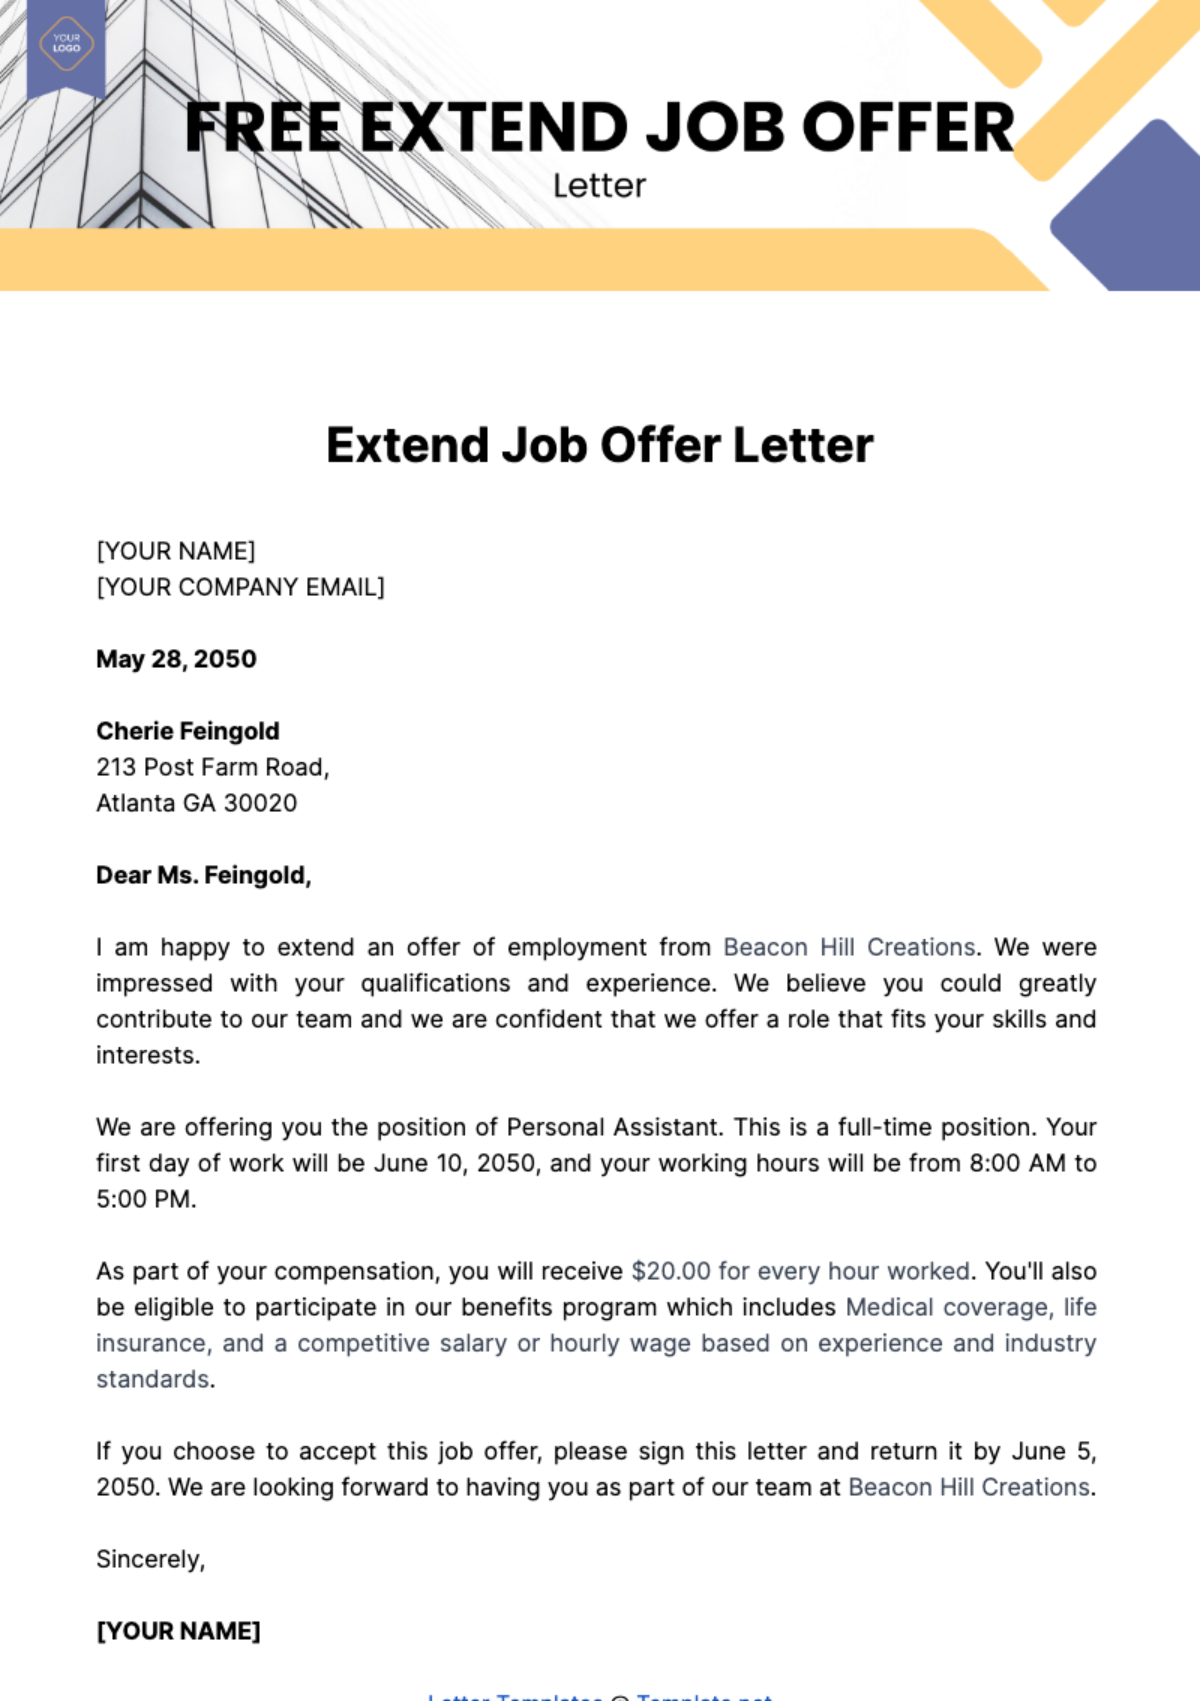 Free Extend Job Offer Letter Template